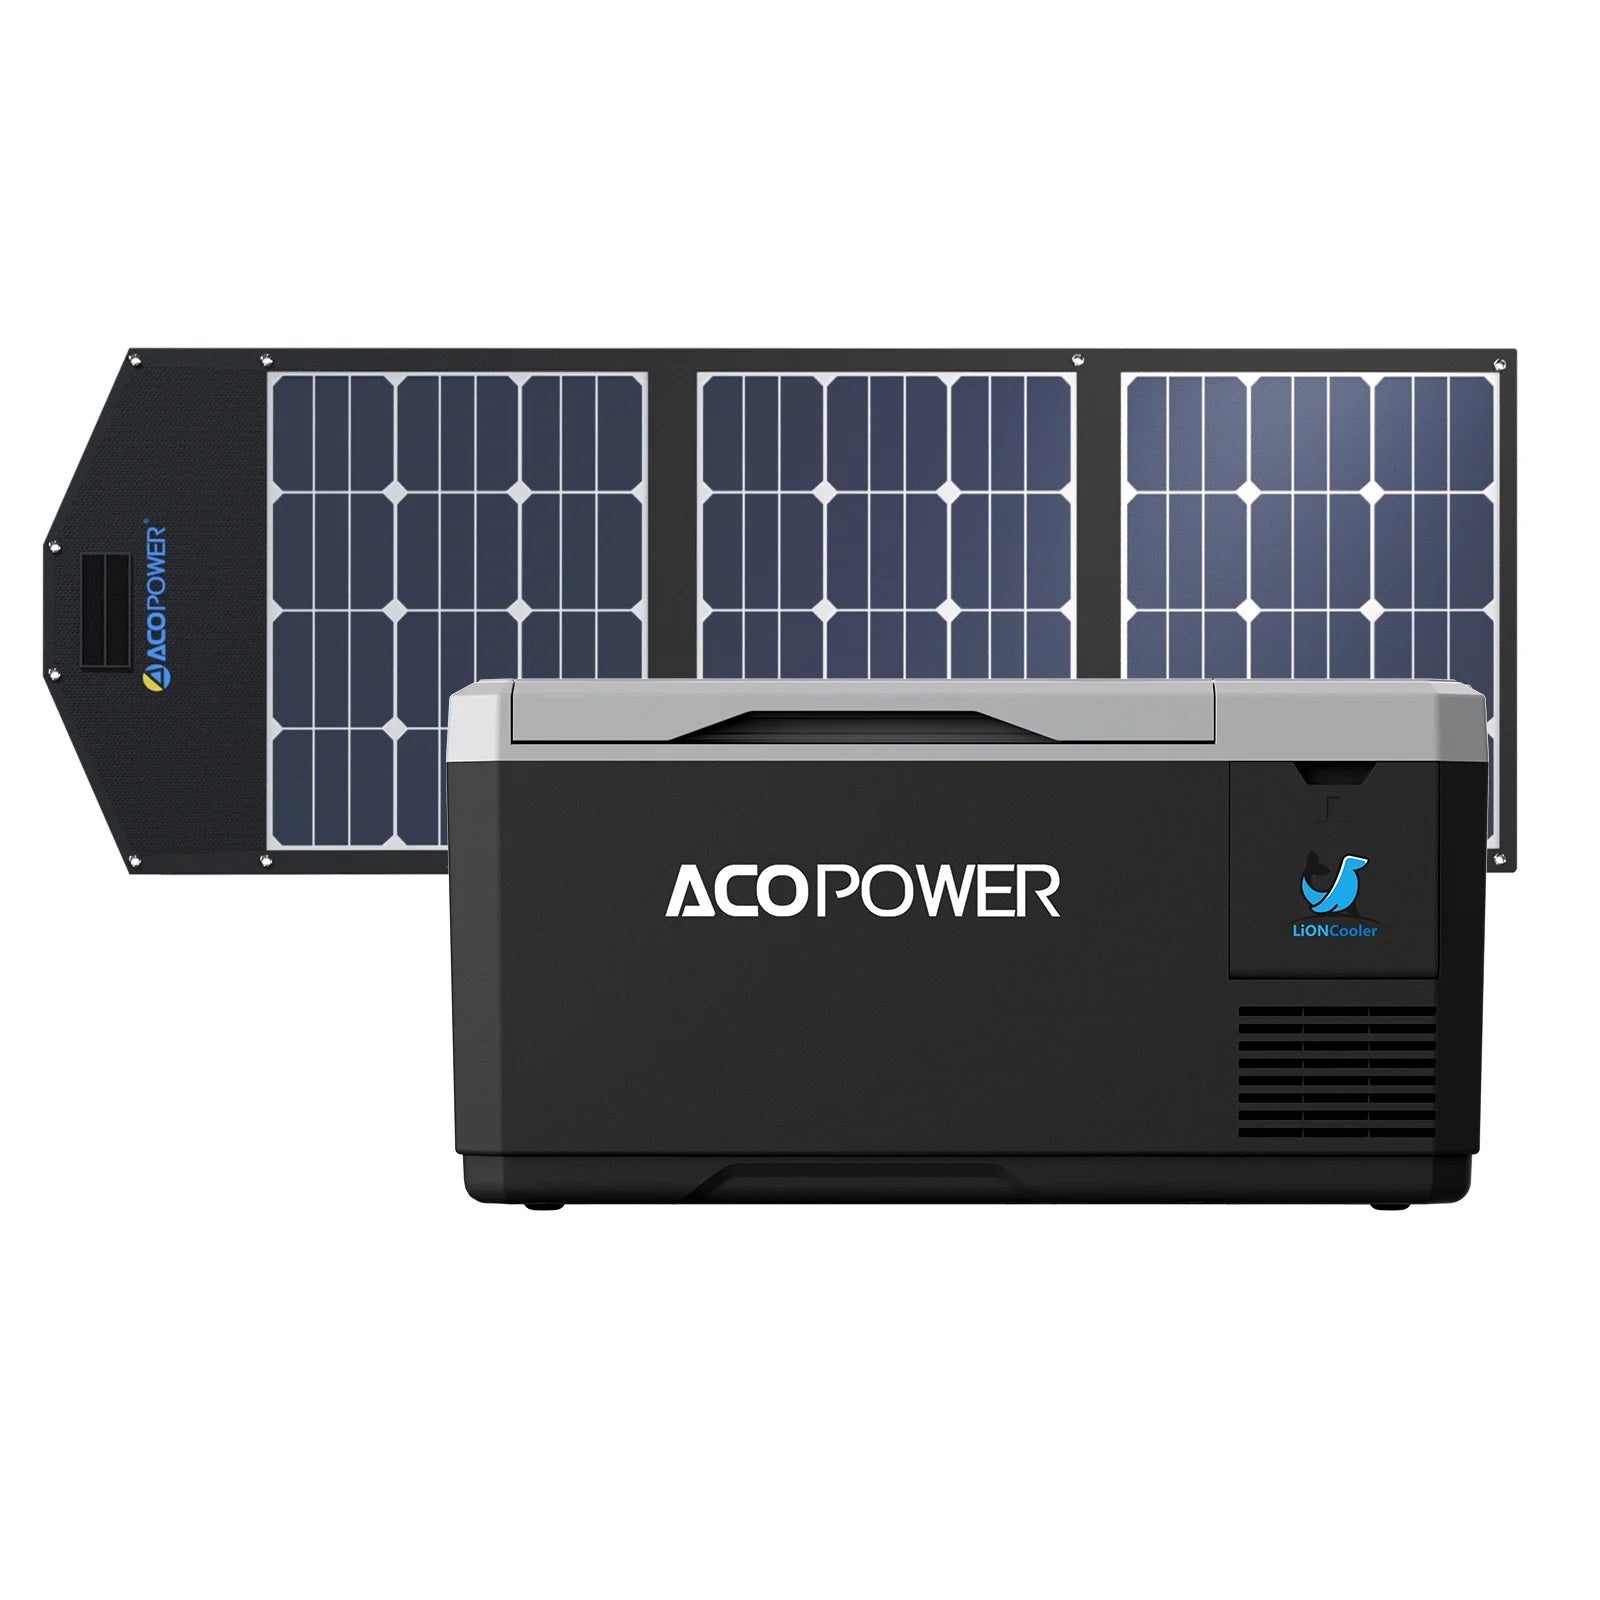 Reviews for ACOPower LiONCooler 52 Qt. Battery Powered Portable